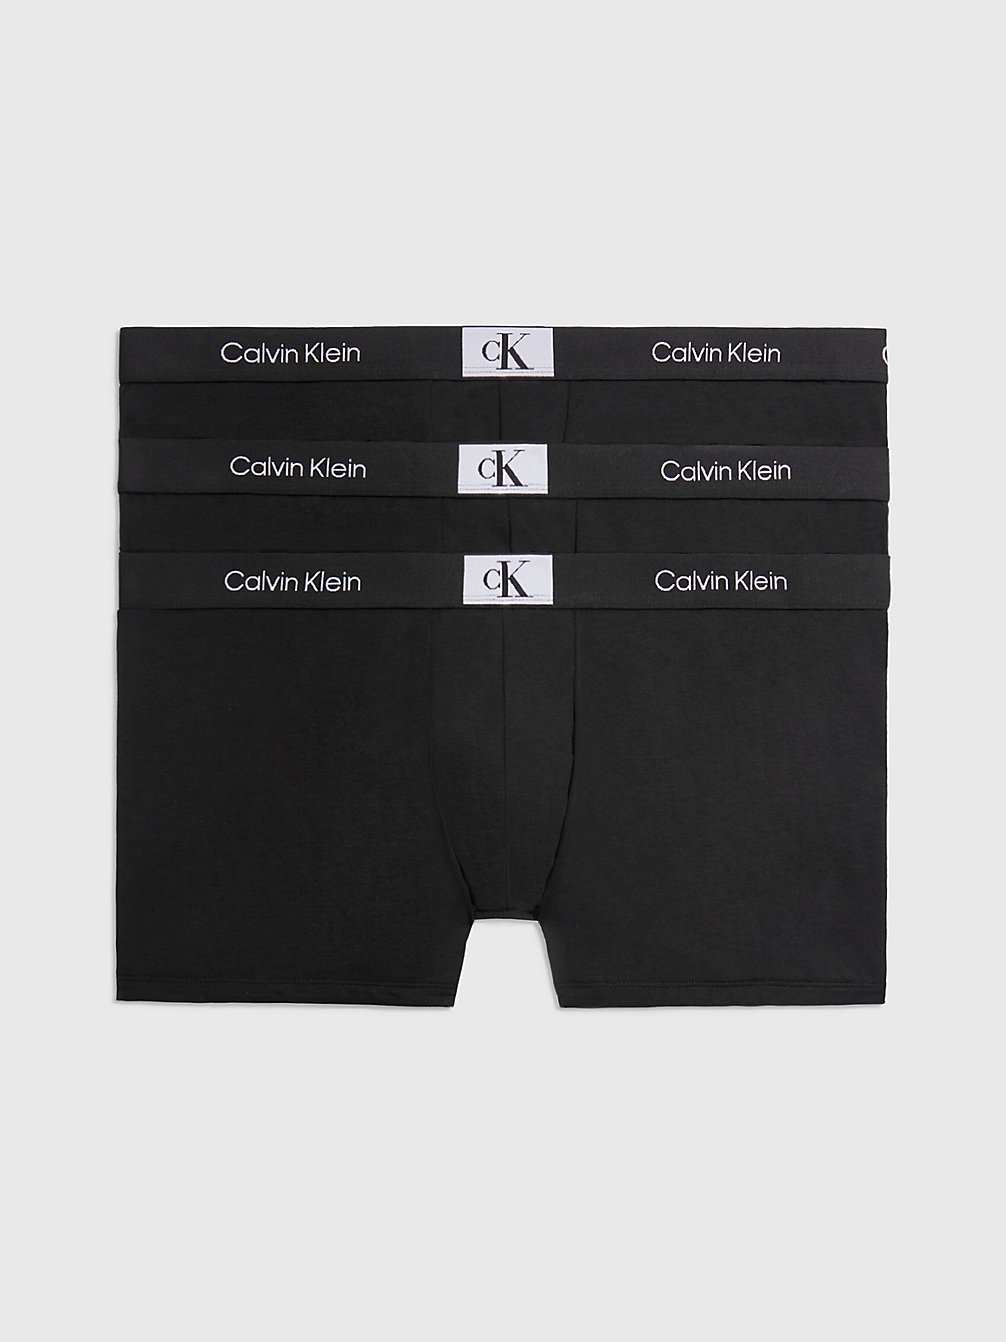 Packe De 3 Trunks De Talla Grande - Ck96 > BLACK/ BLACK / BLACK > undefined mujer > Calvin Klein